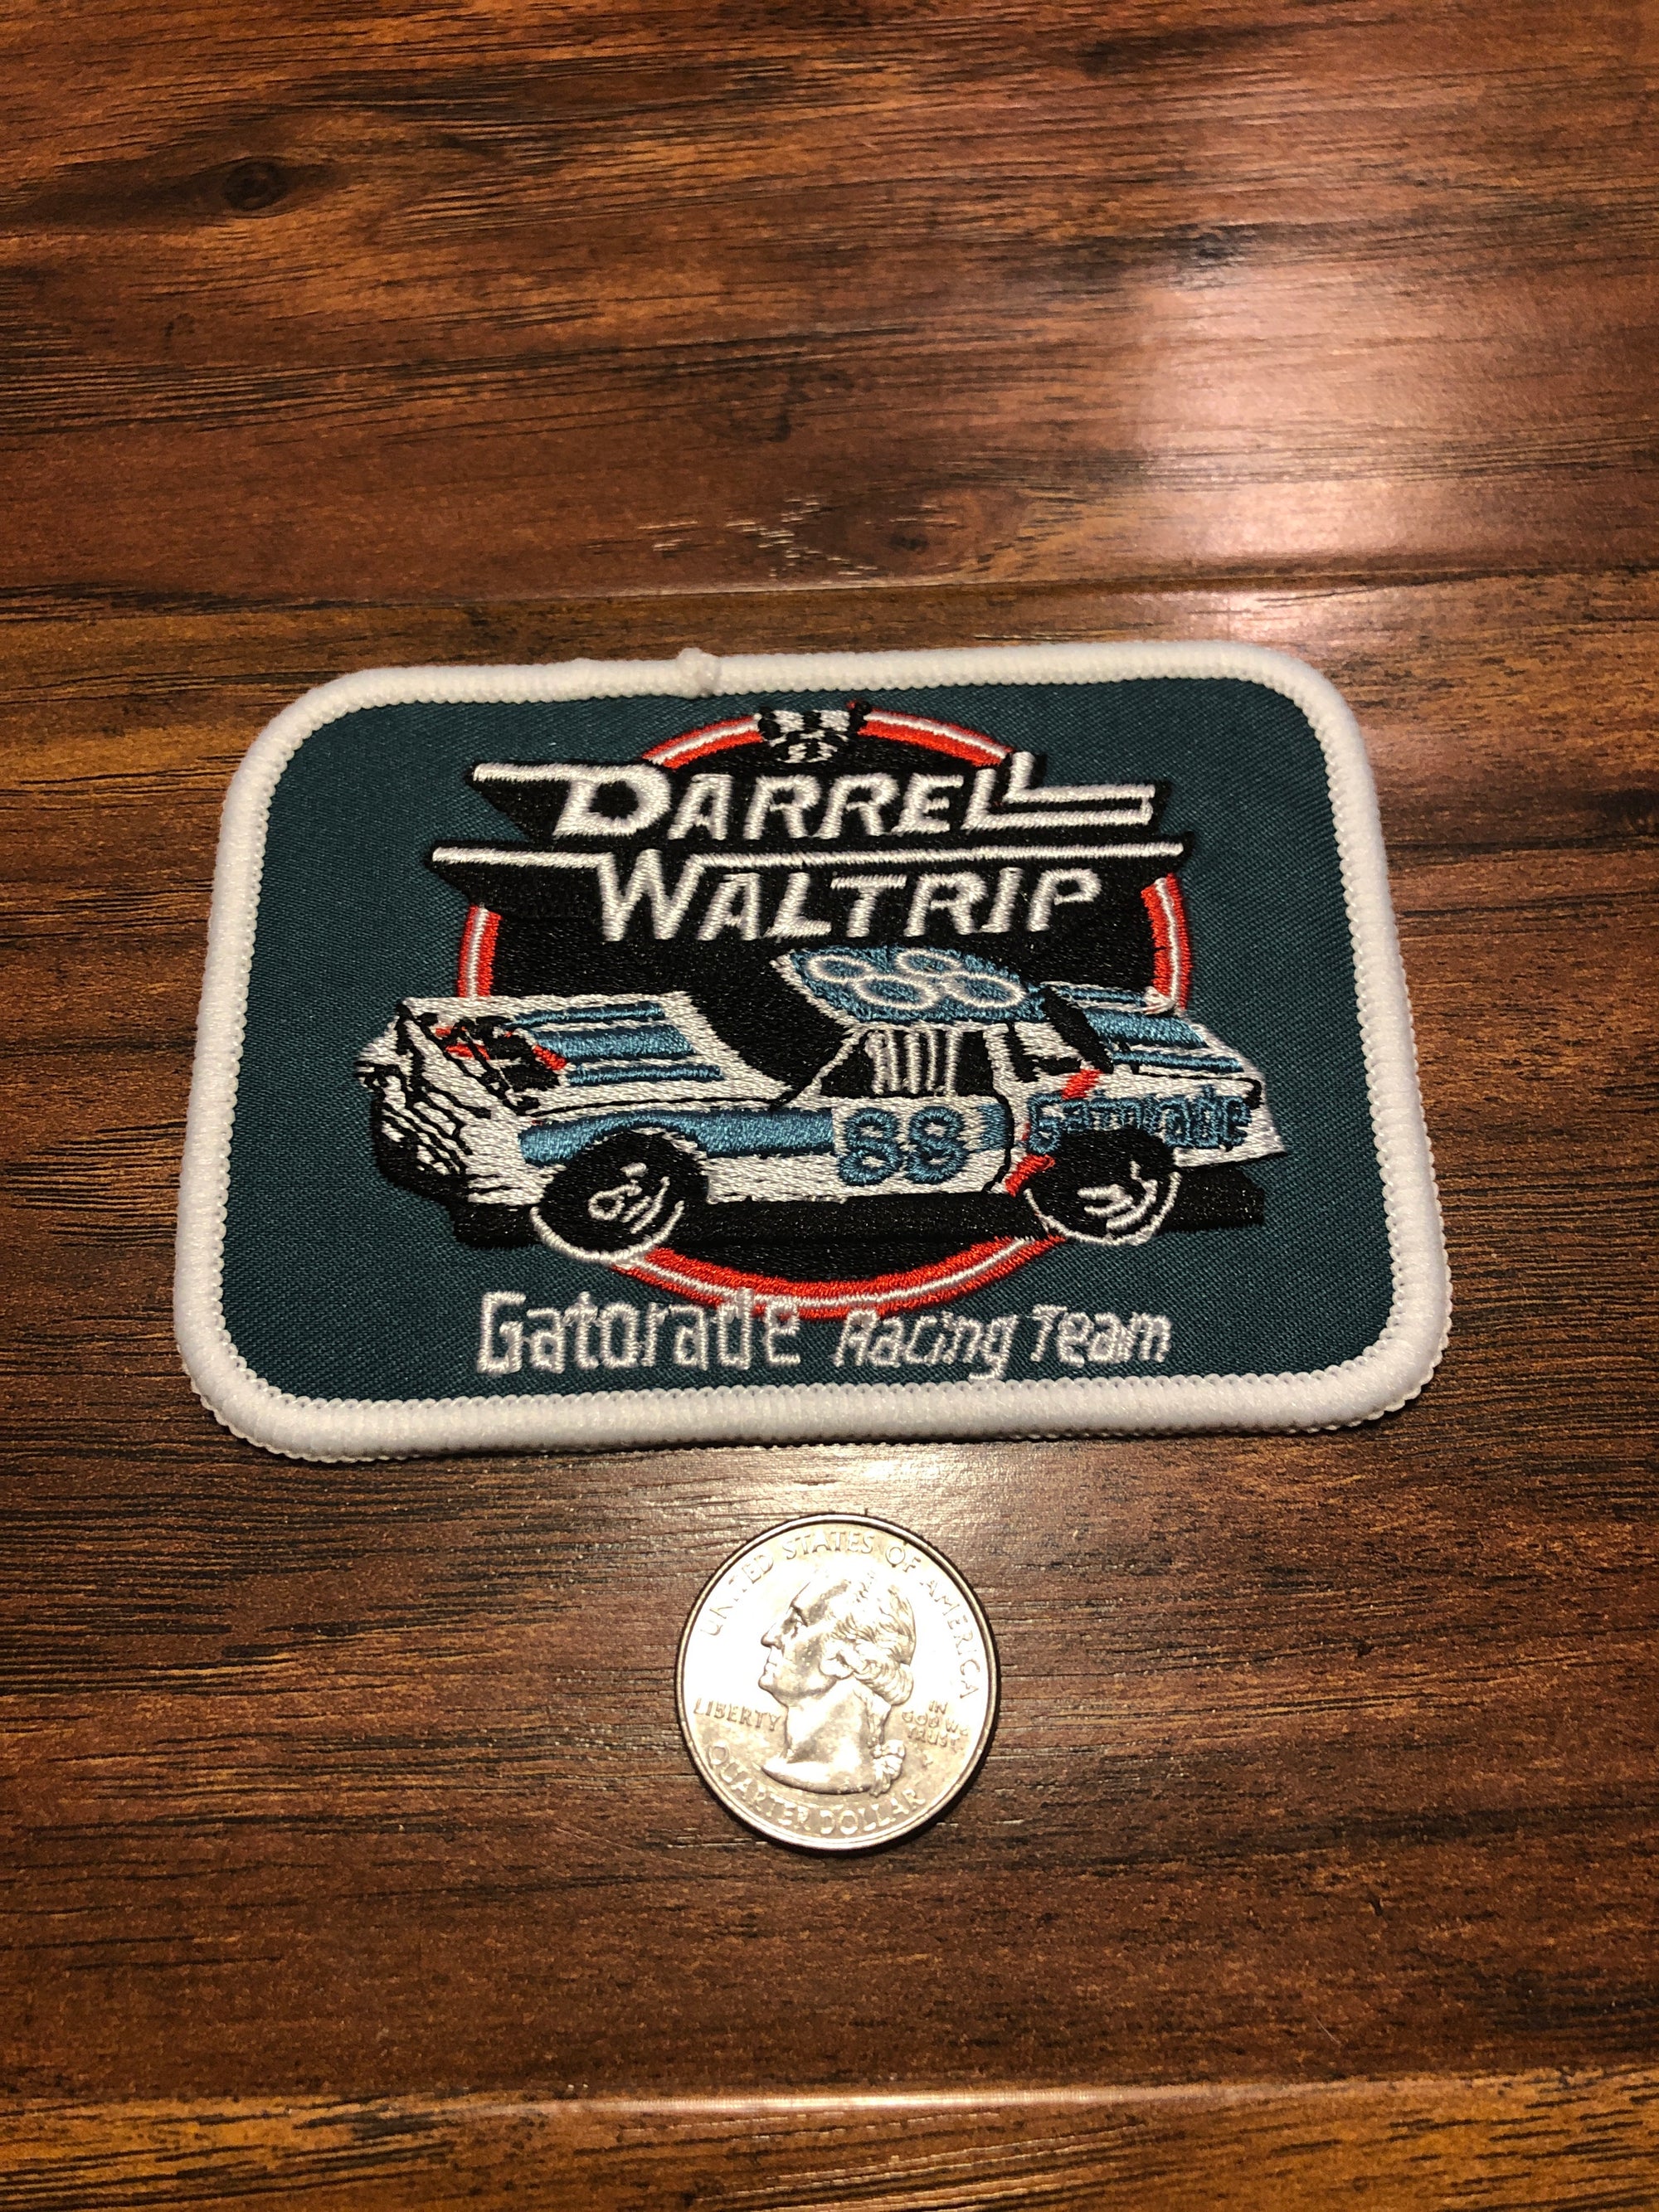 Gatorade Racing Team Darrell Waltrip